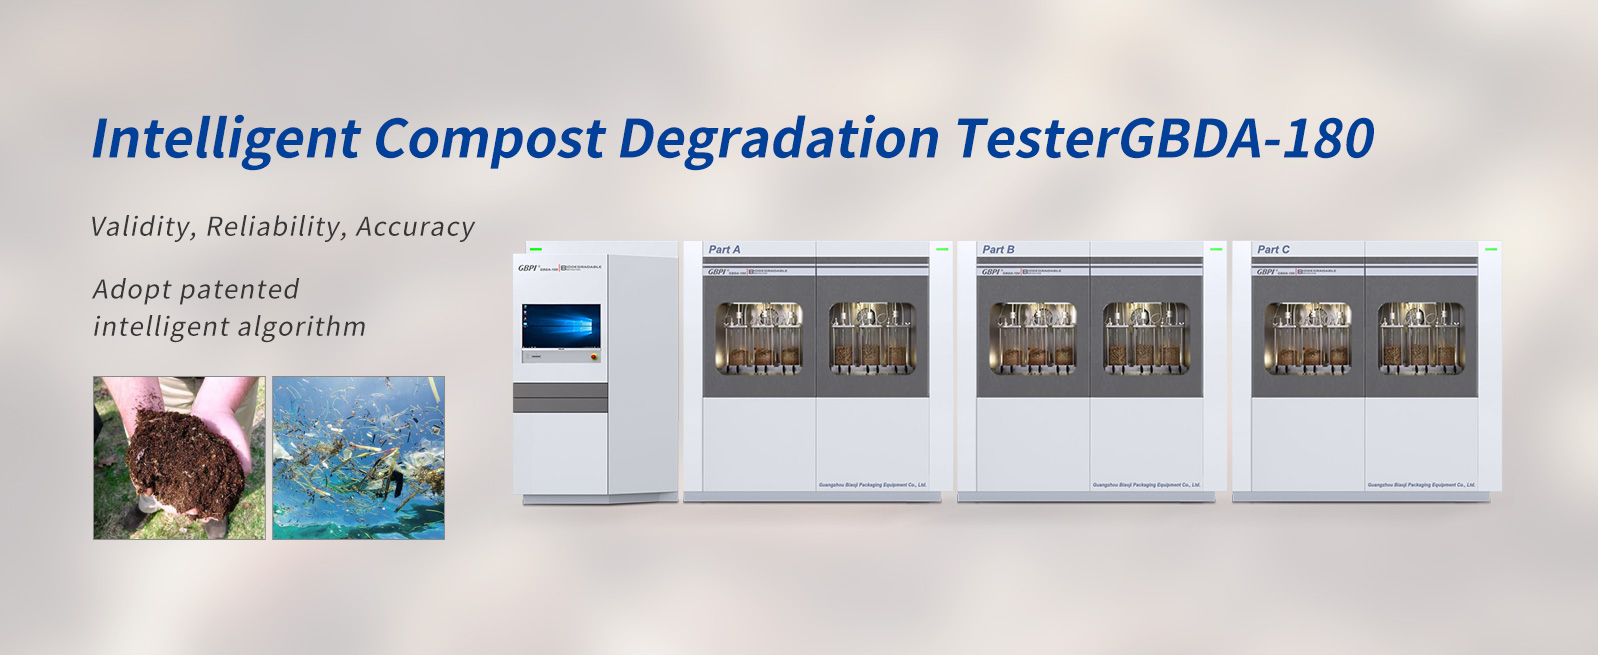 Intelligent Compost Degradation Tester GBDA-180